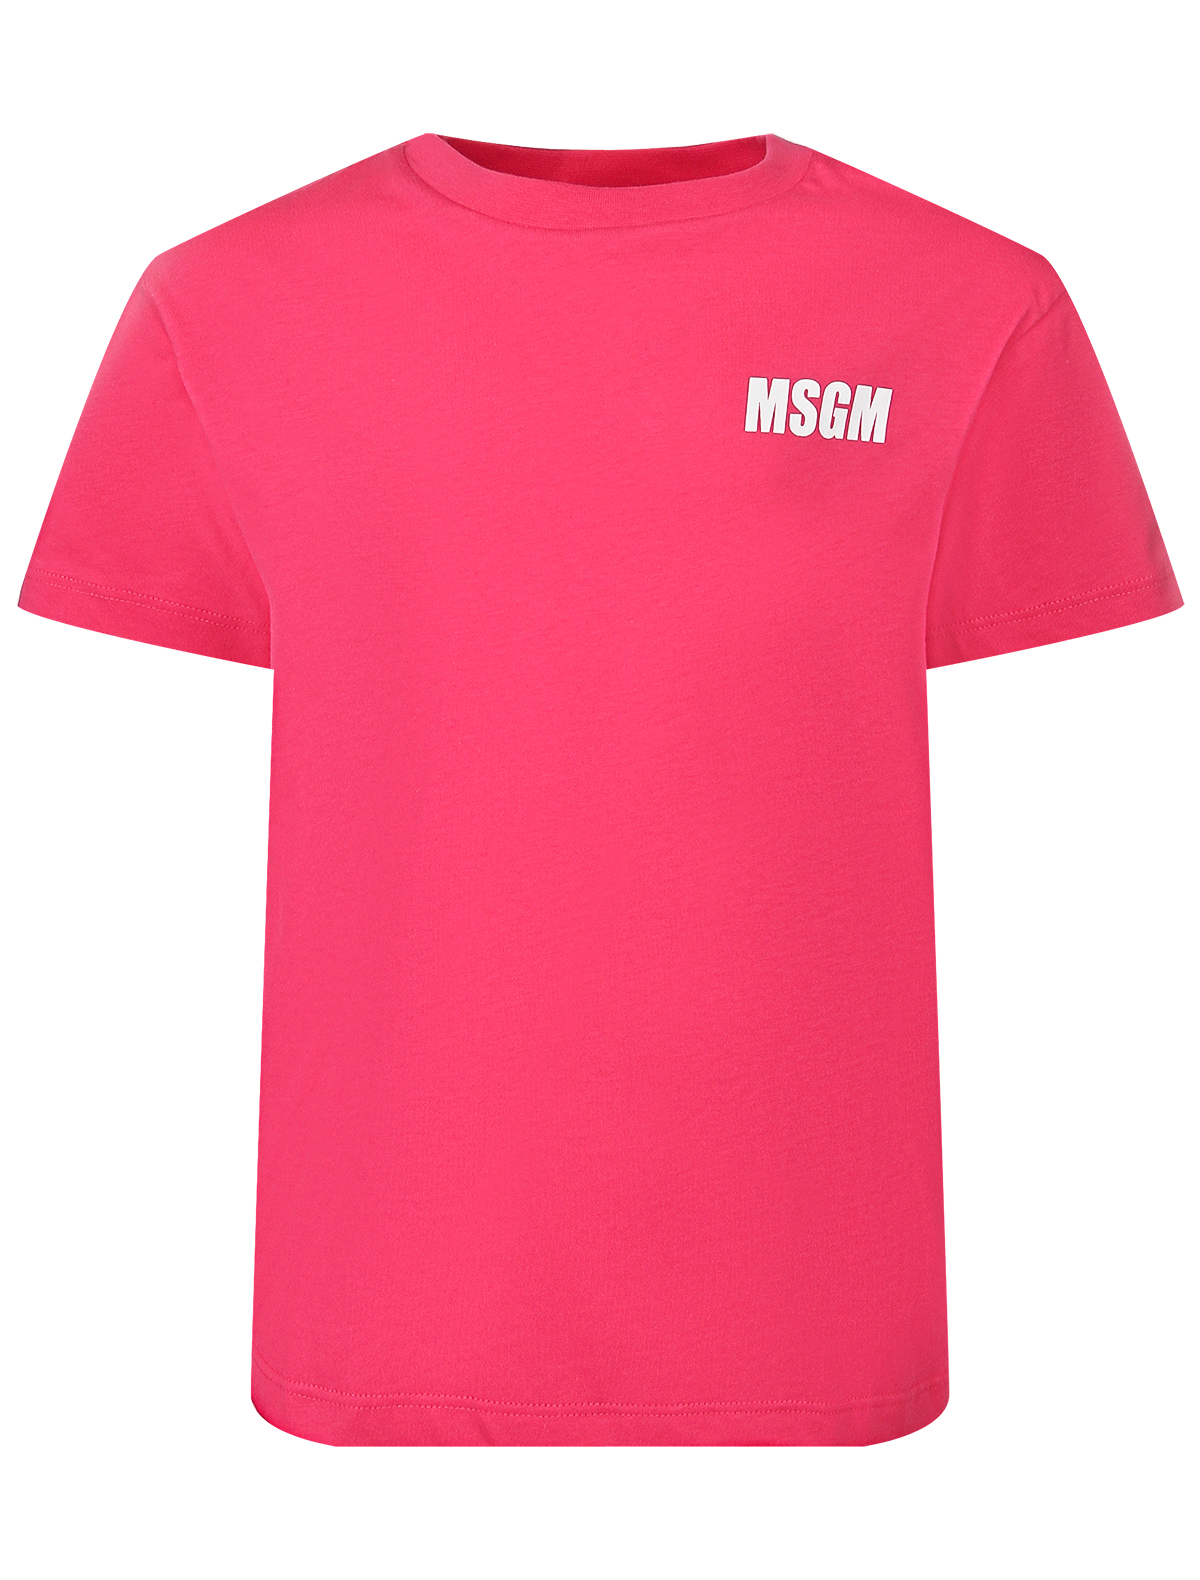 Футболка MSGM 2648562, цвет розовый, размер 7 1134509413203 - фото 1